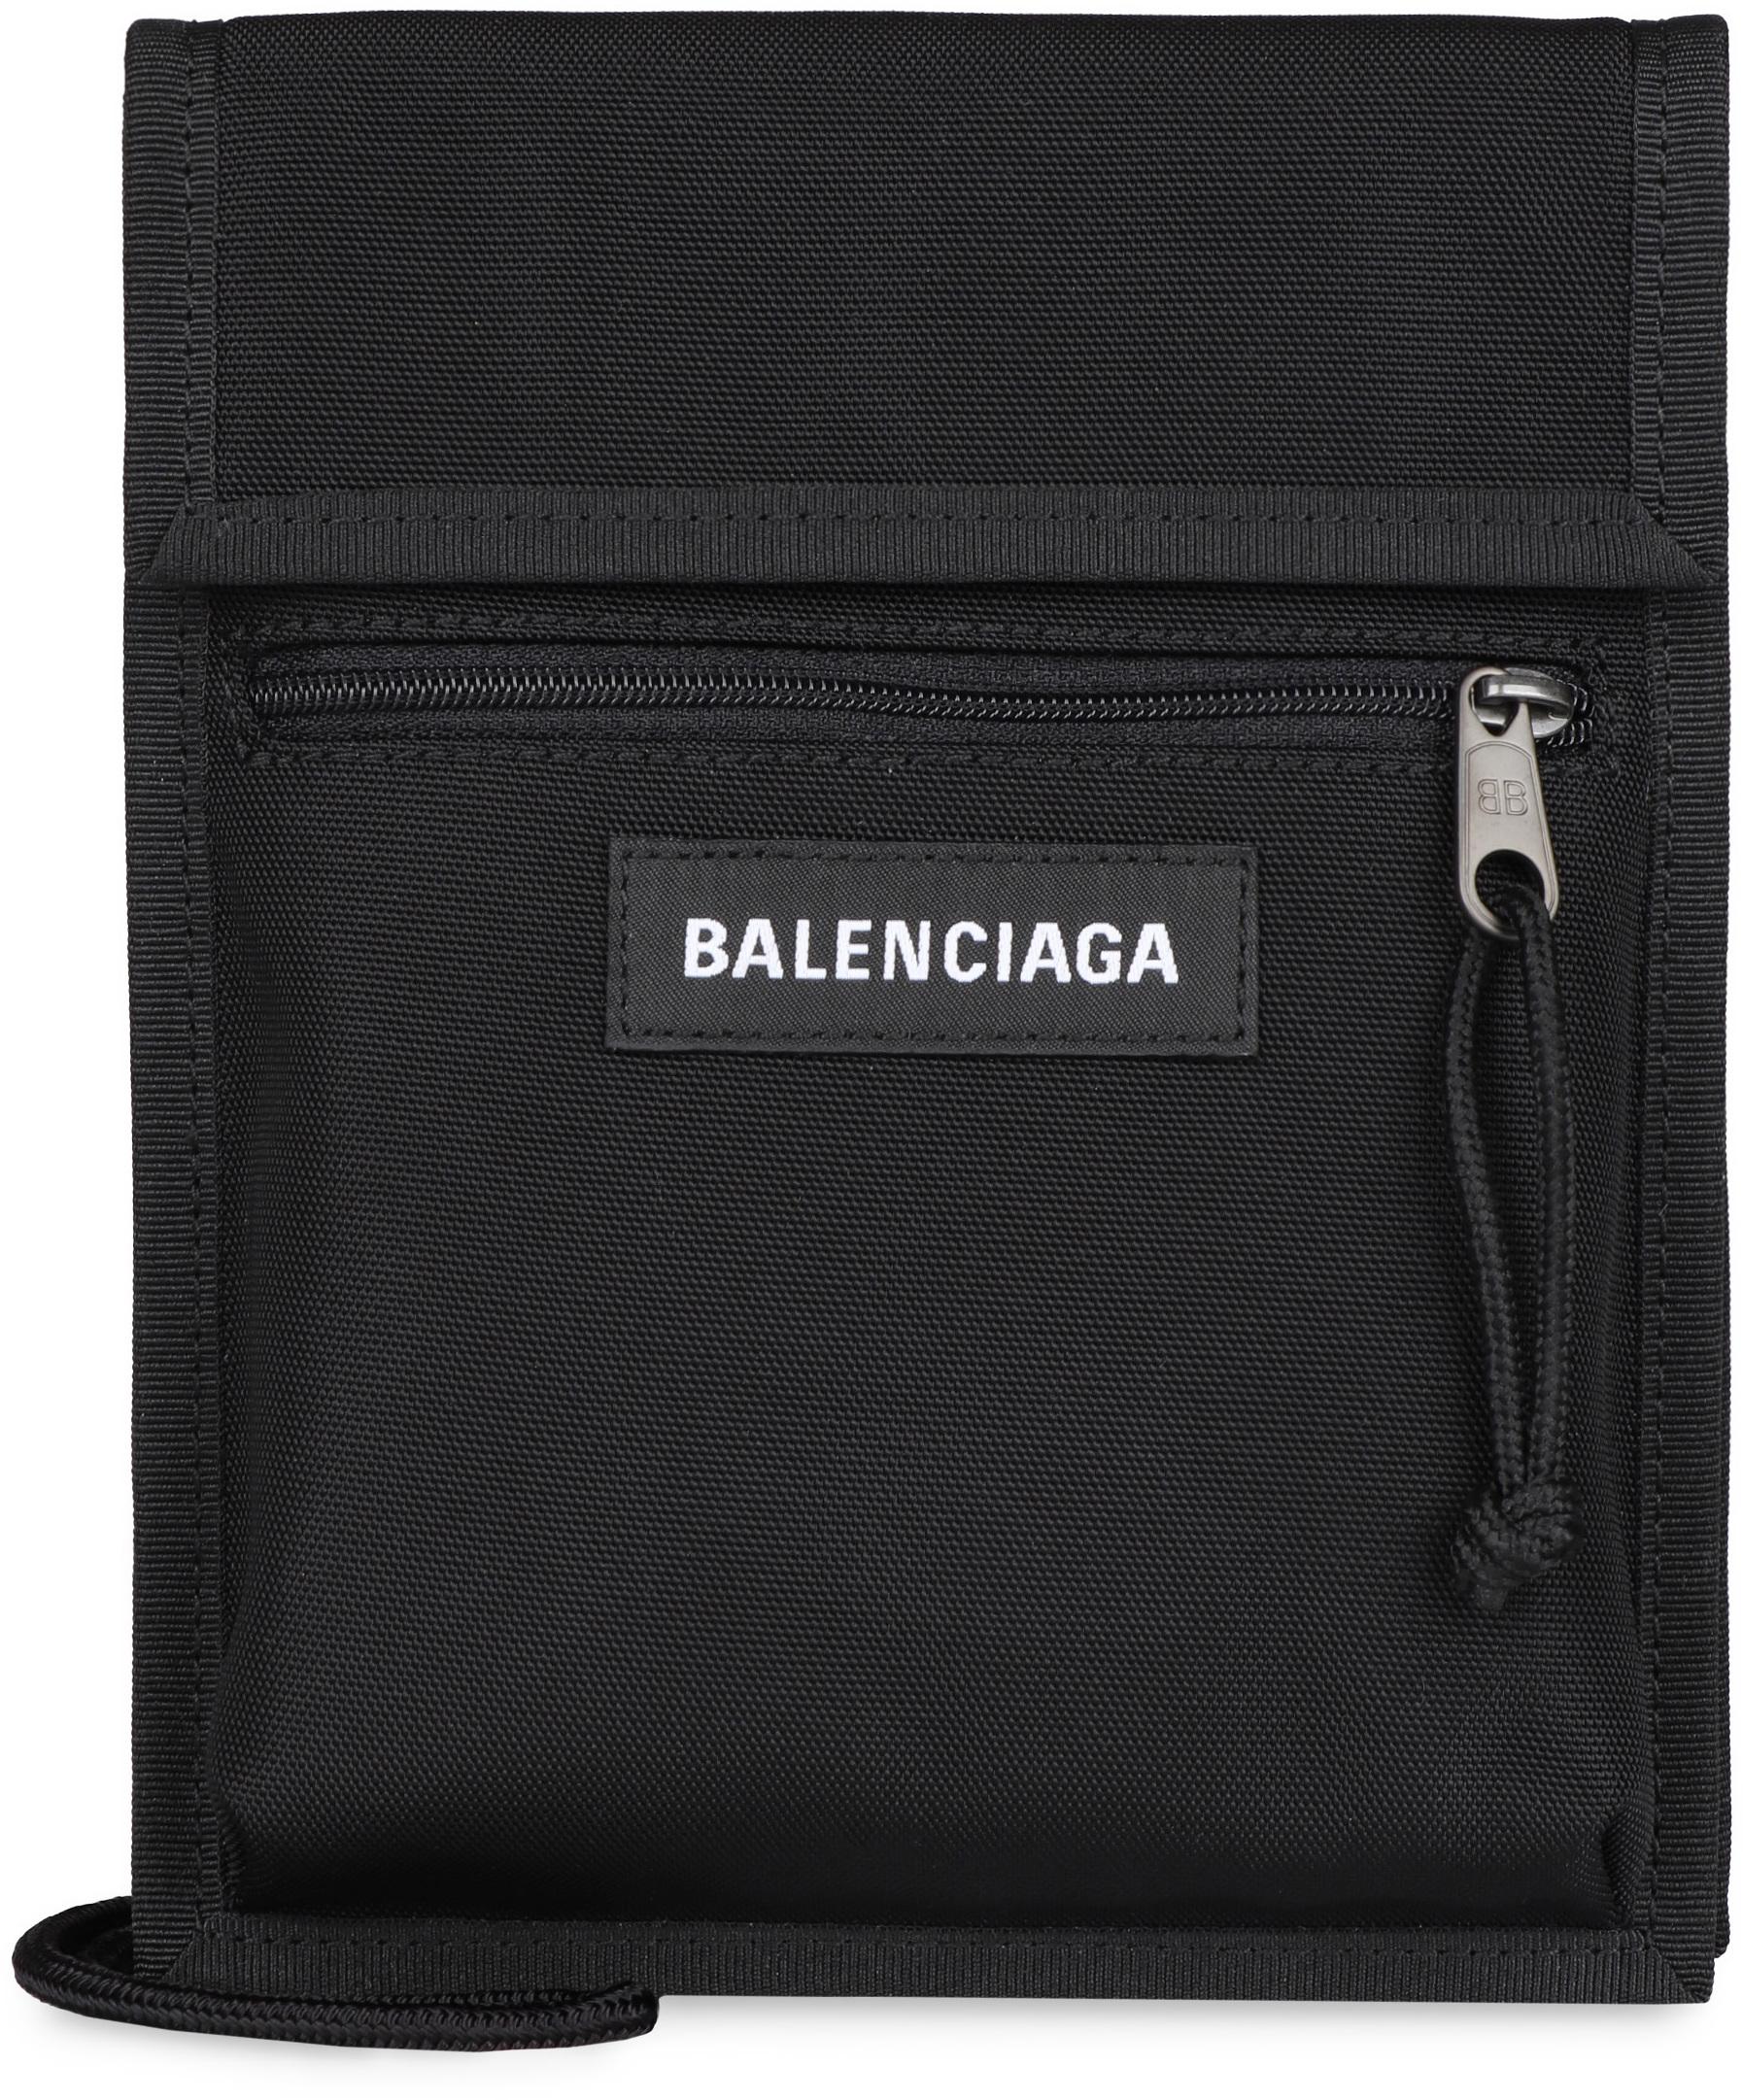 Balenciaga Synthetic Explorer Nylon Pouch Strap in Black for Men - Lyst